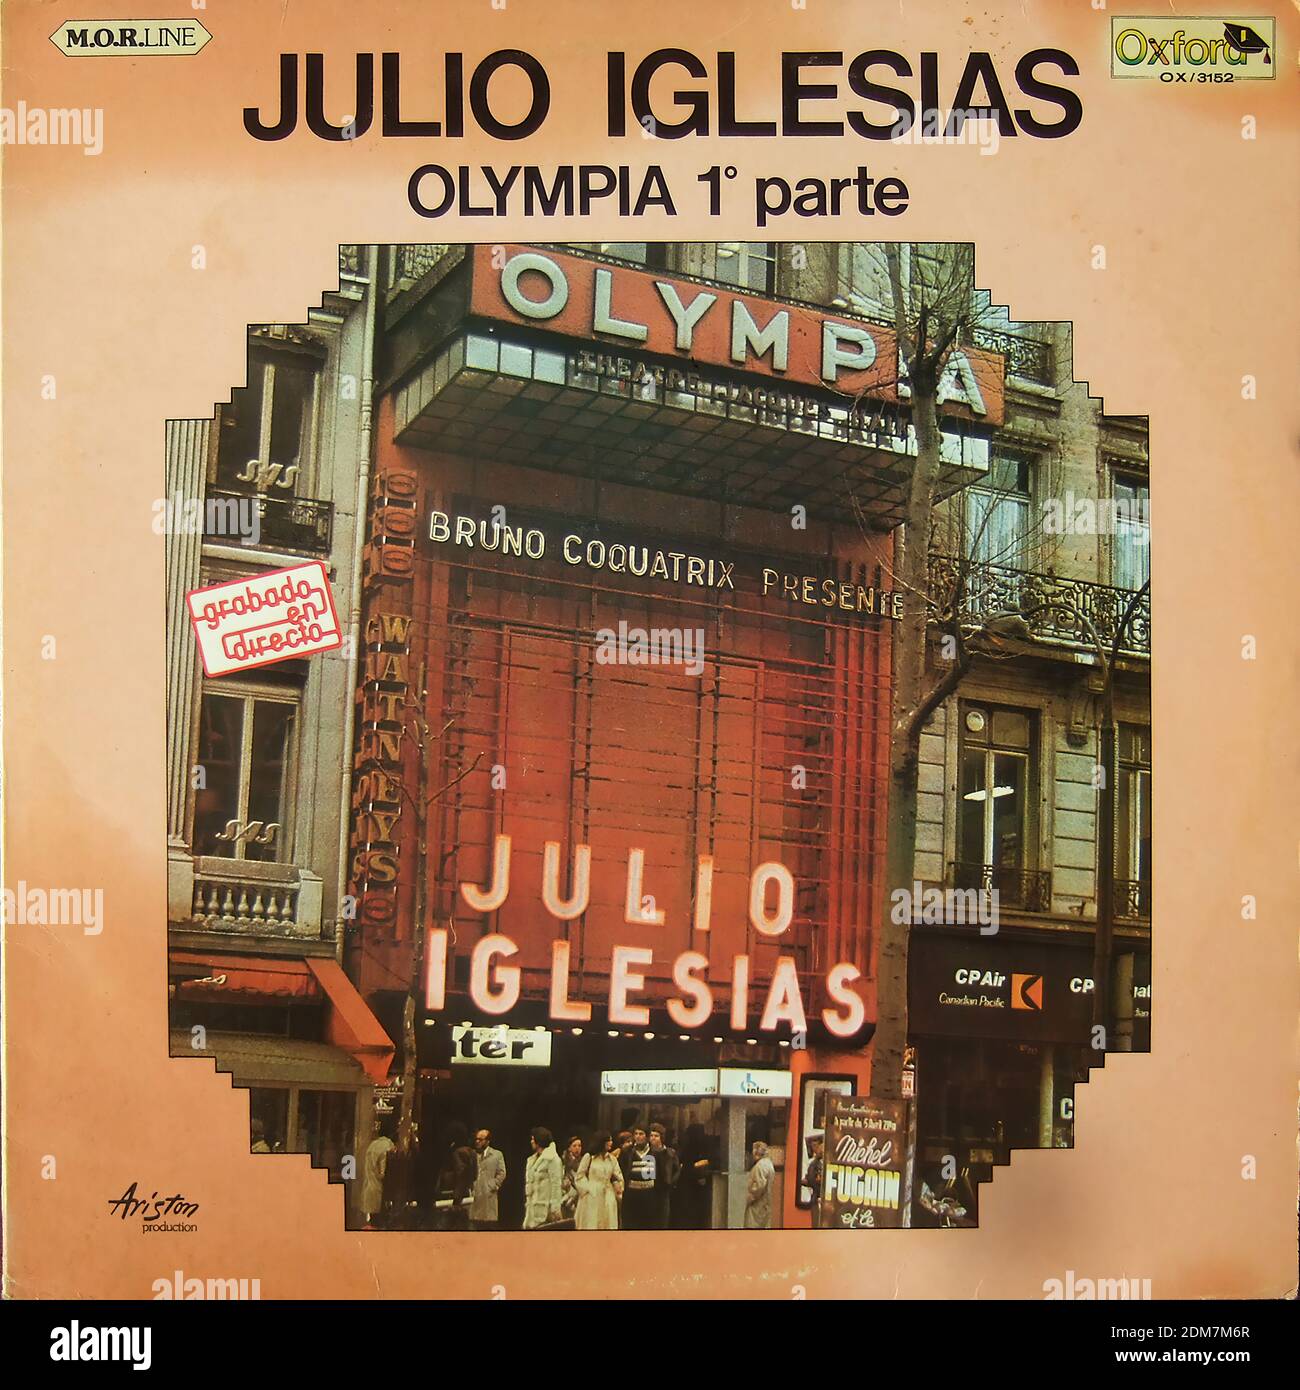 Julio Iglesias - Olympia 1e Parte, Live - Vintage vinyl album cover Stock Photo